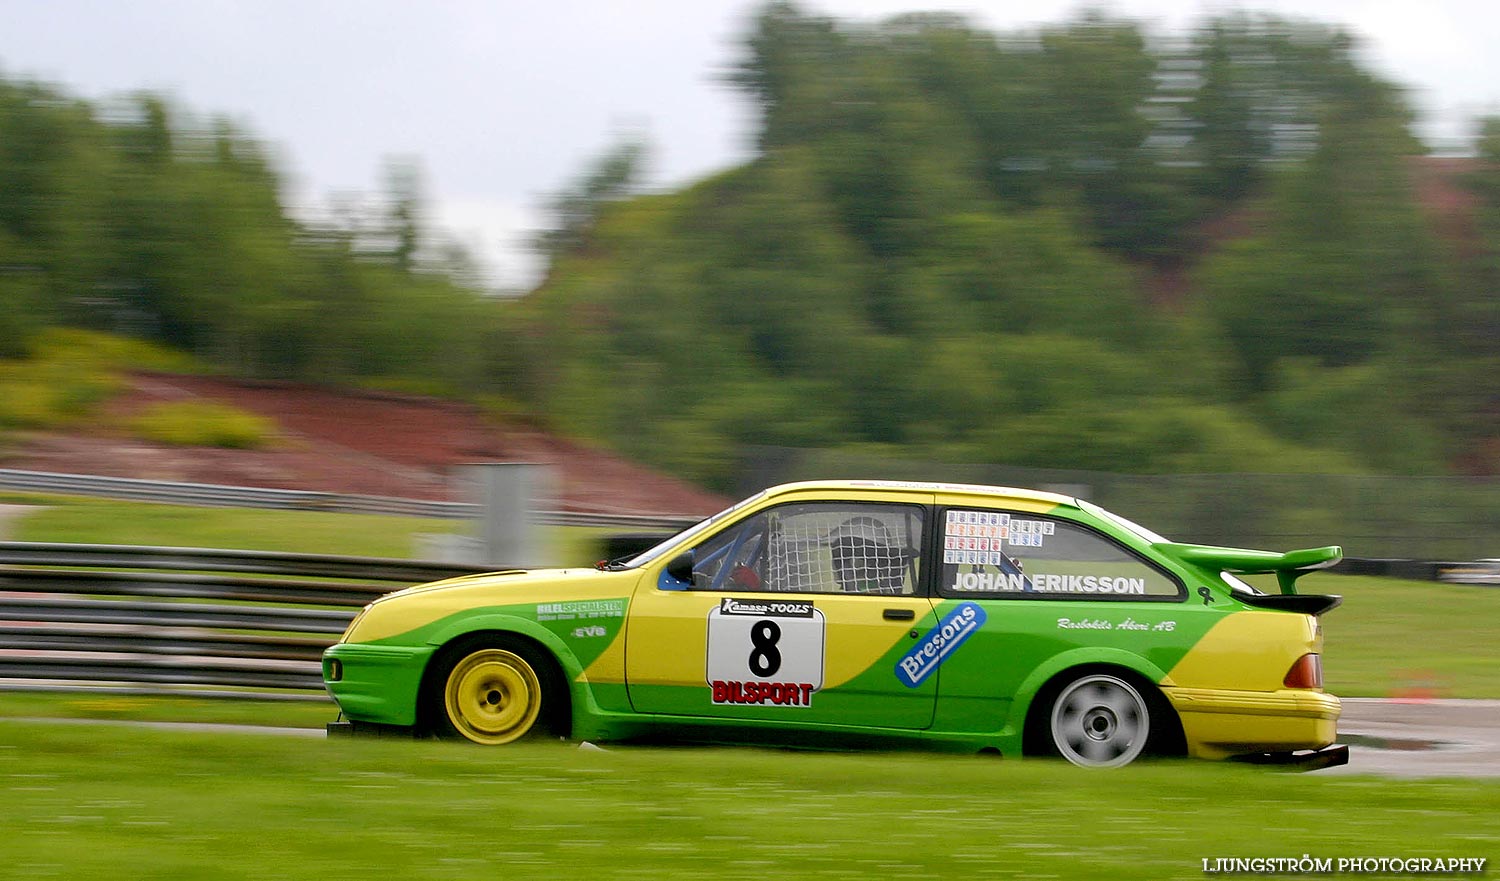 SSK Raceweek,mix,Kinnekulle Ring,Götene,Sverige,Motorsport,,2004,92425